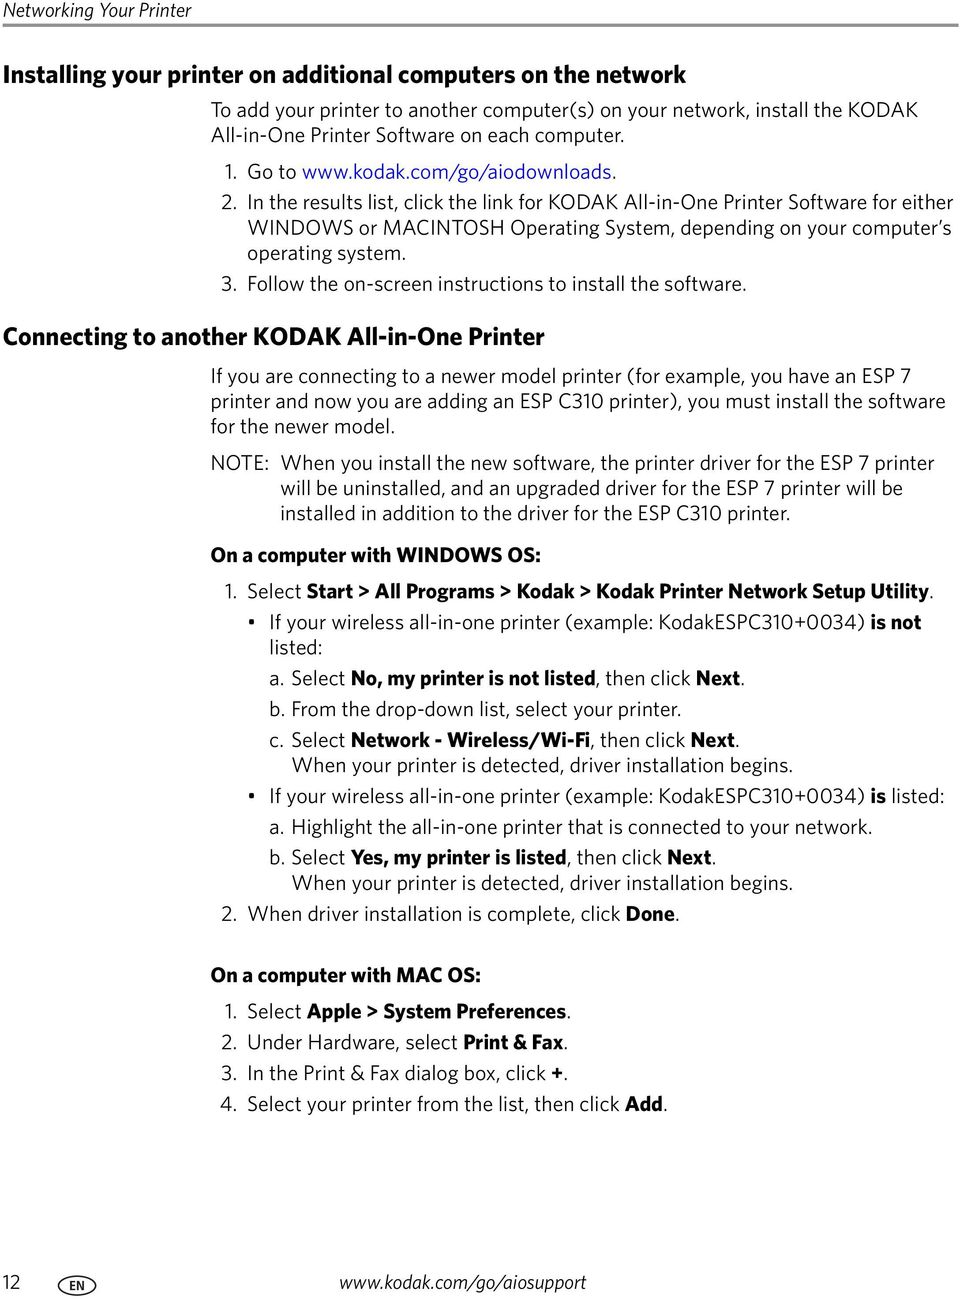 Kodak esp 7 software download for mac